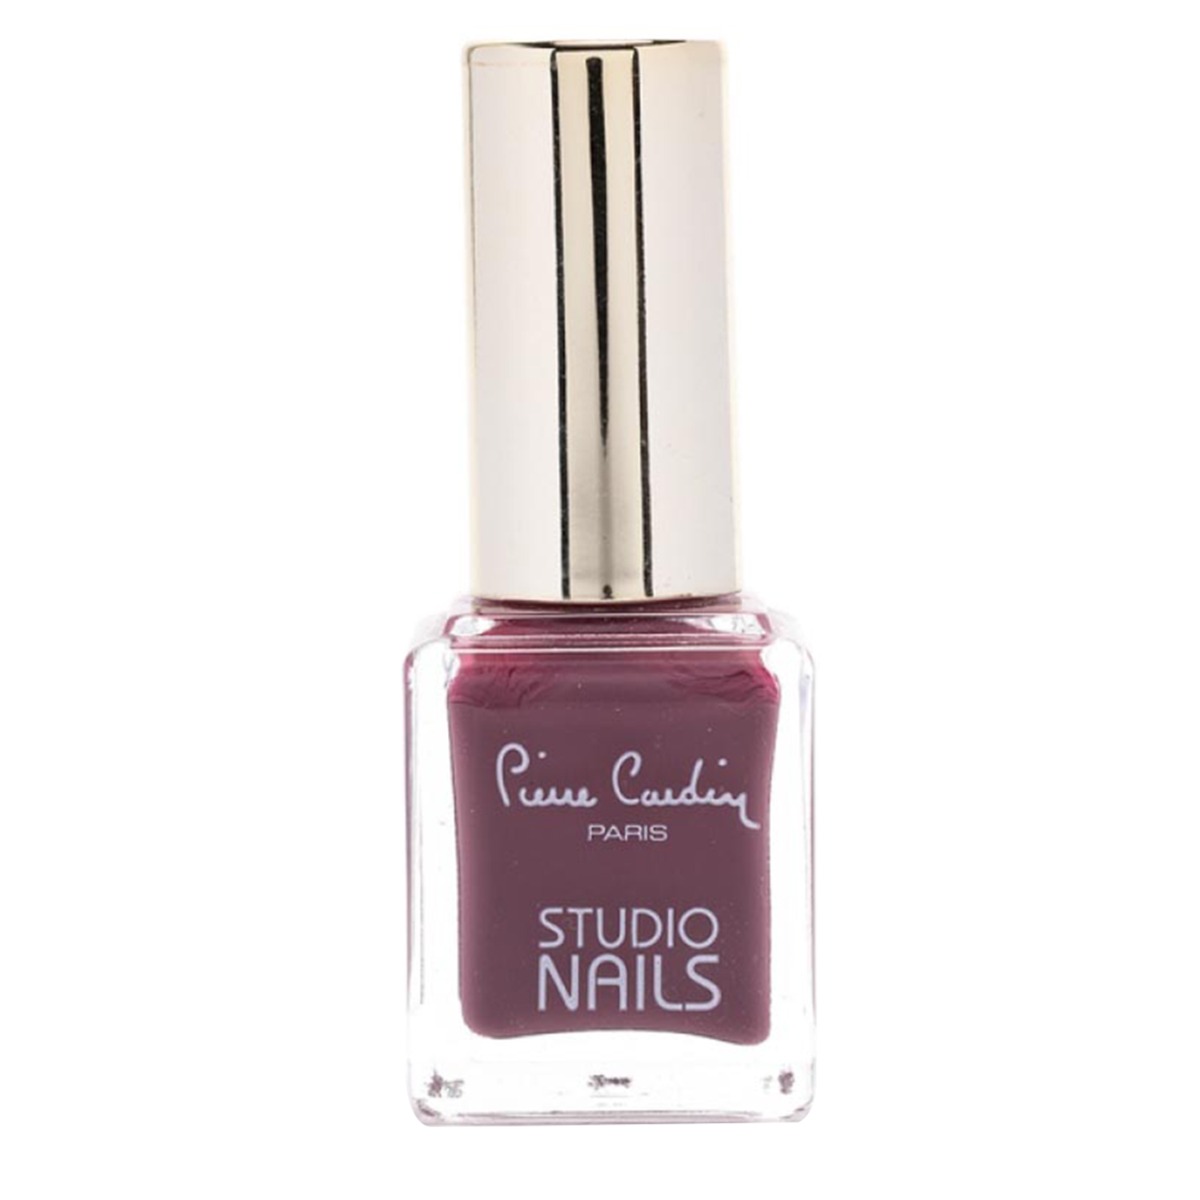 Pierre Cardin Paris - Studio Nails, 11.5ml-30 - Dark Pink